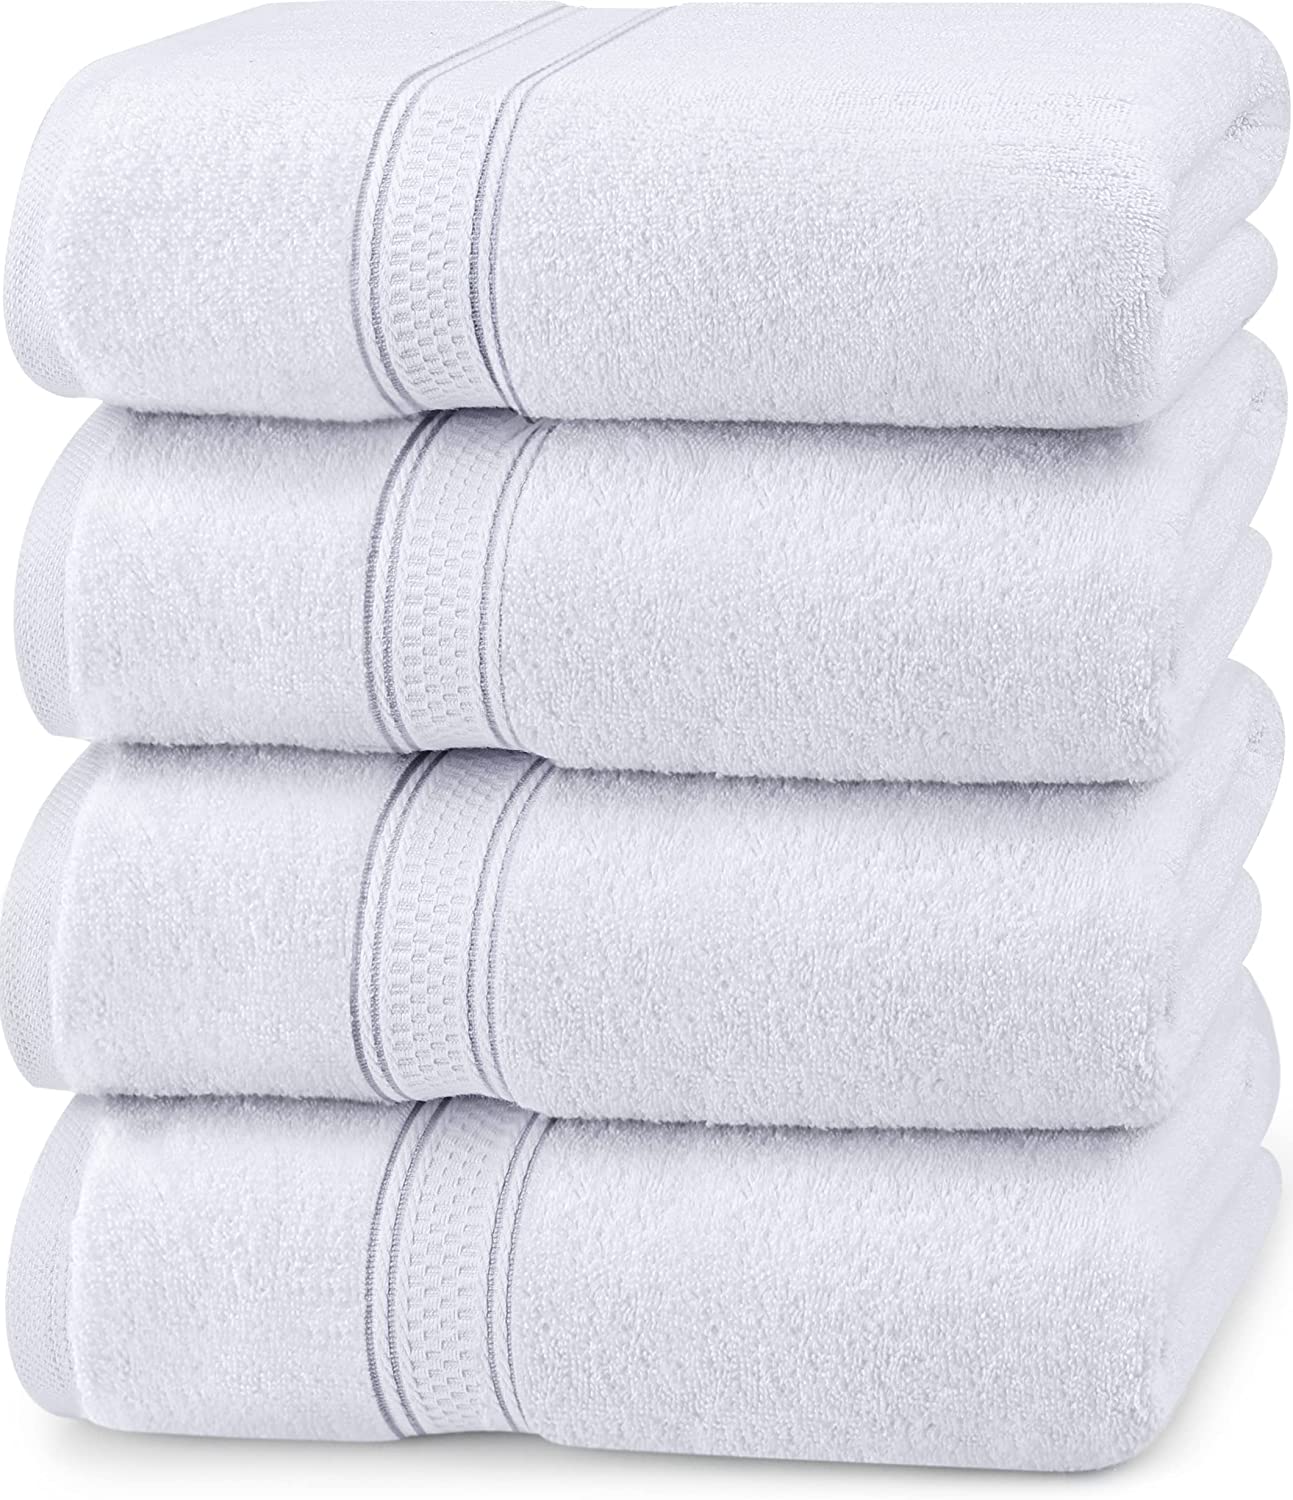 Utopia Towels 4 Pack Premium Bath Towels Set, (27 x 54 Inches) 100